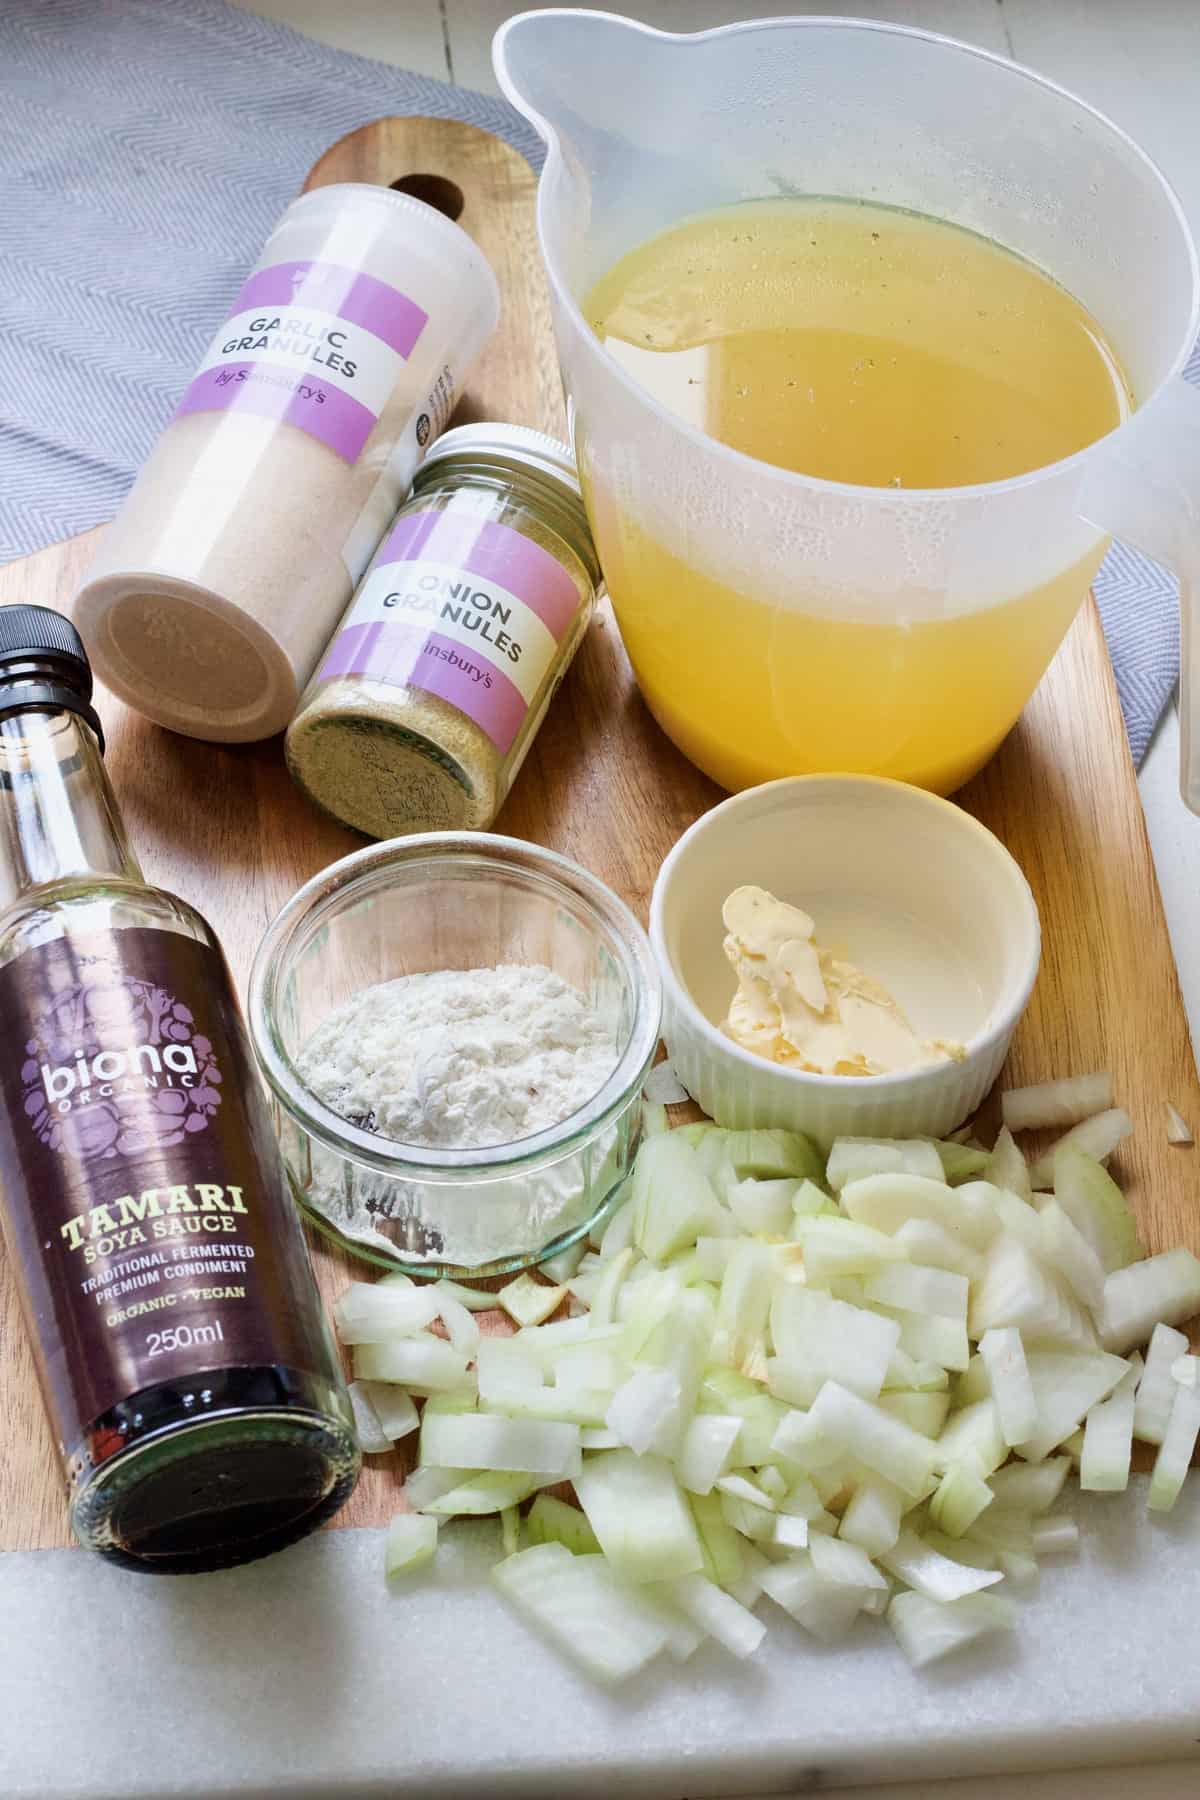 Ingredients for making vegan onion gravy.